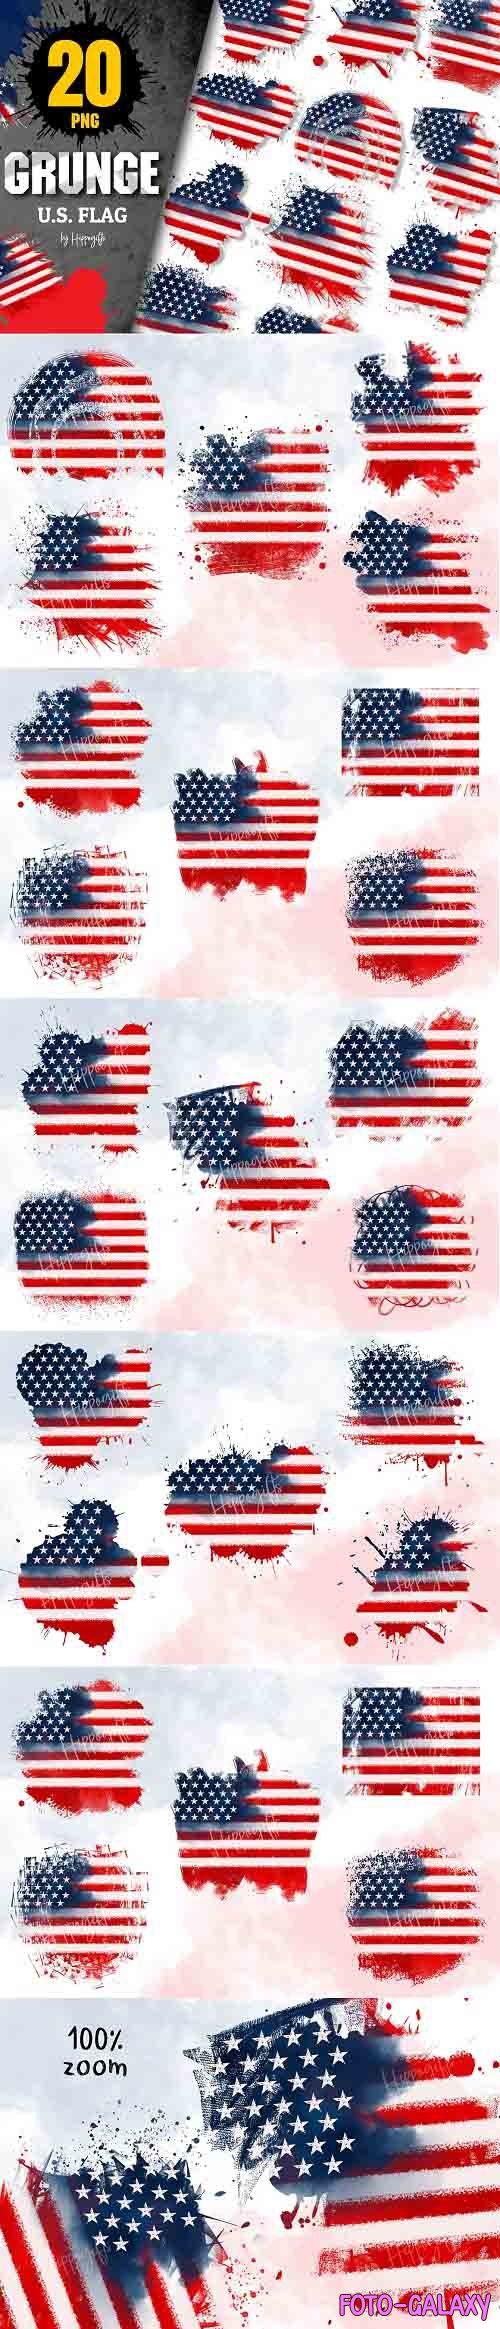 4th of July US Flag grunge clip art - 6147396